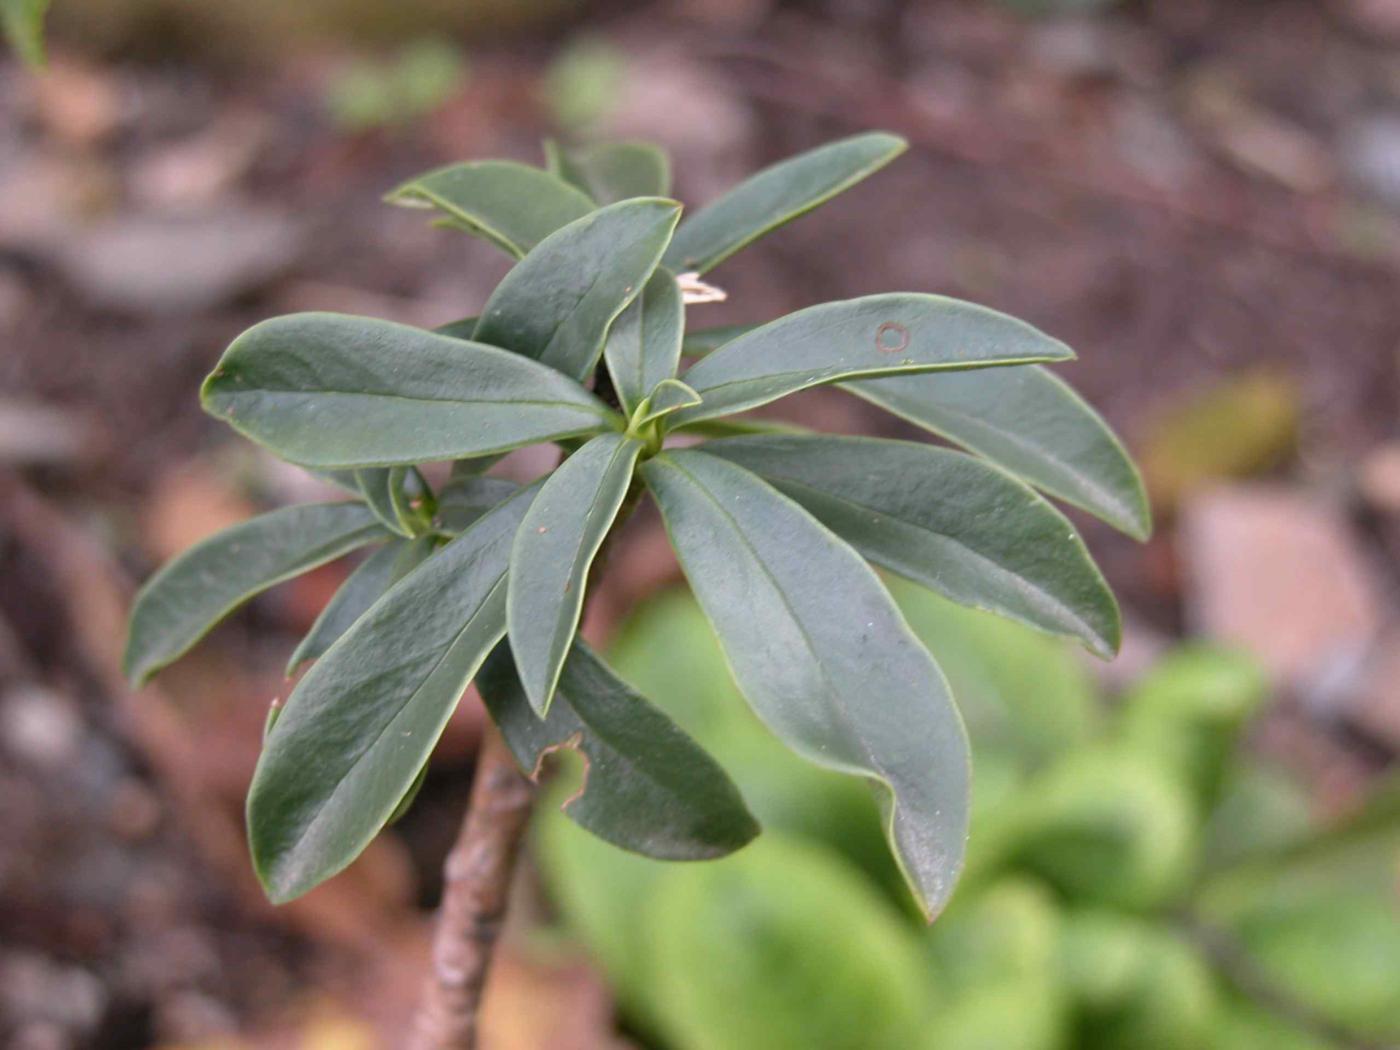 Spurge laurel leaf